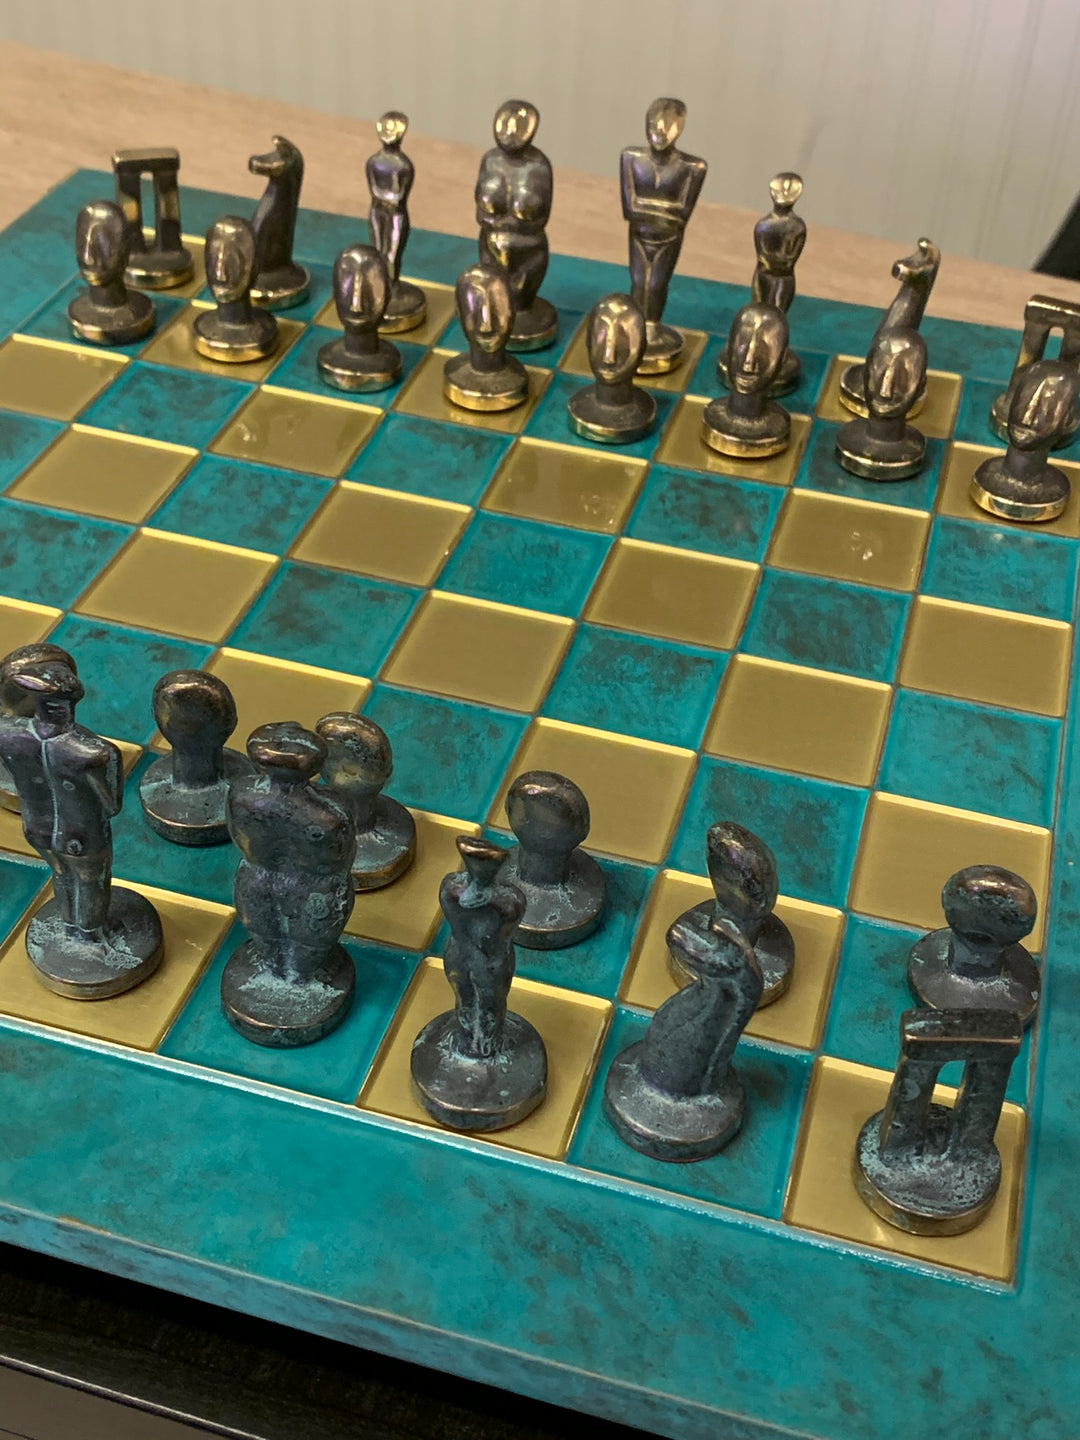 Large Chess Set, Cycladic Art Metal Chess Set